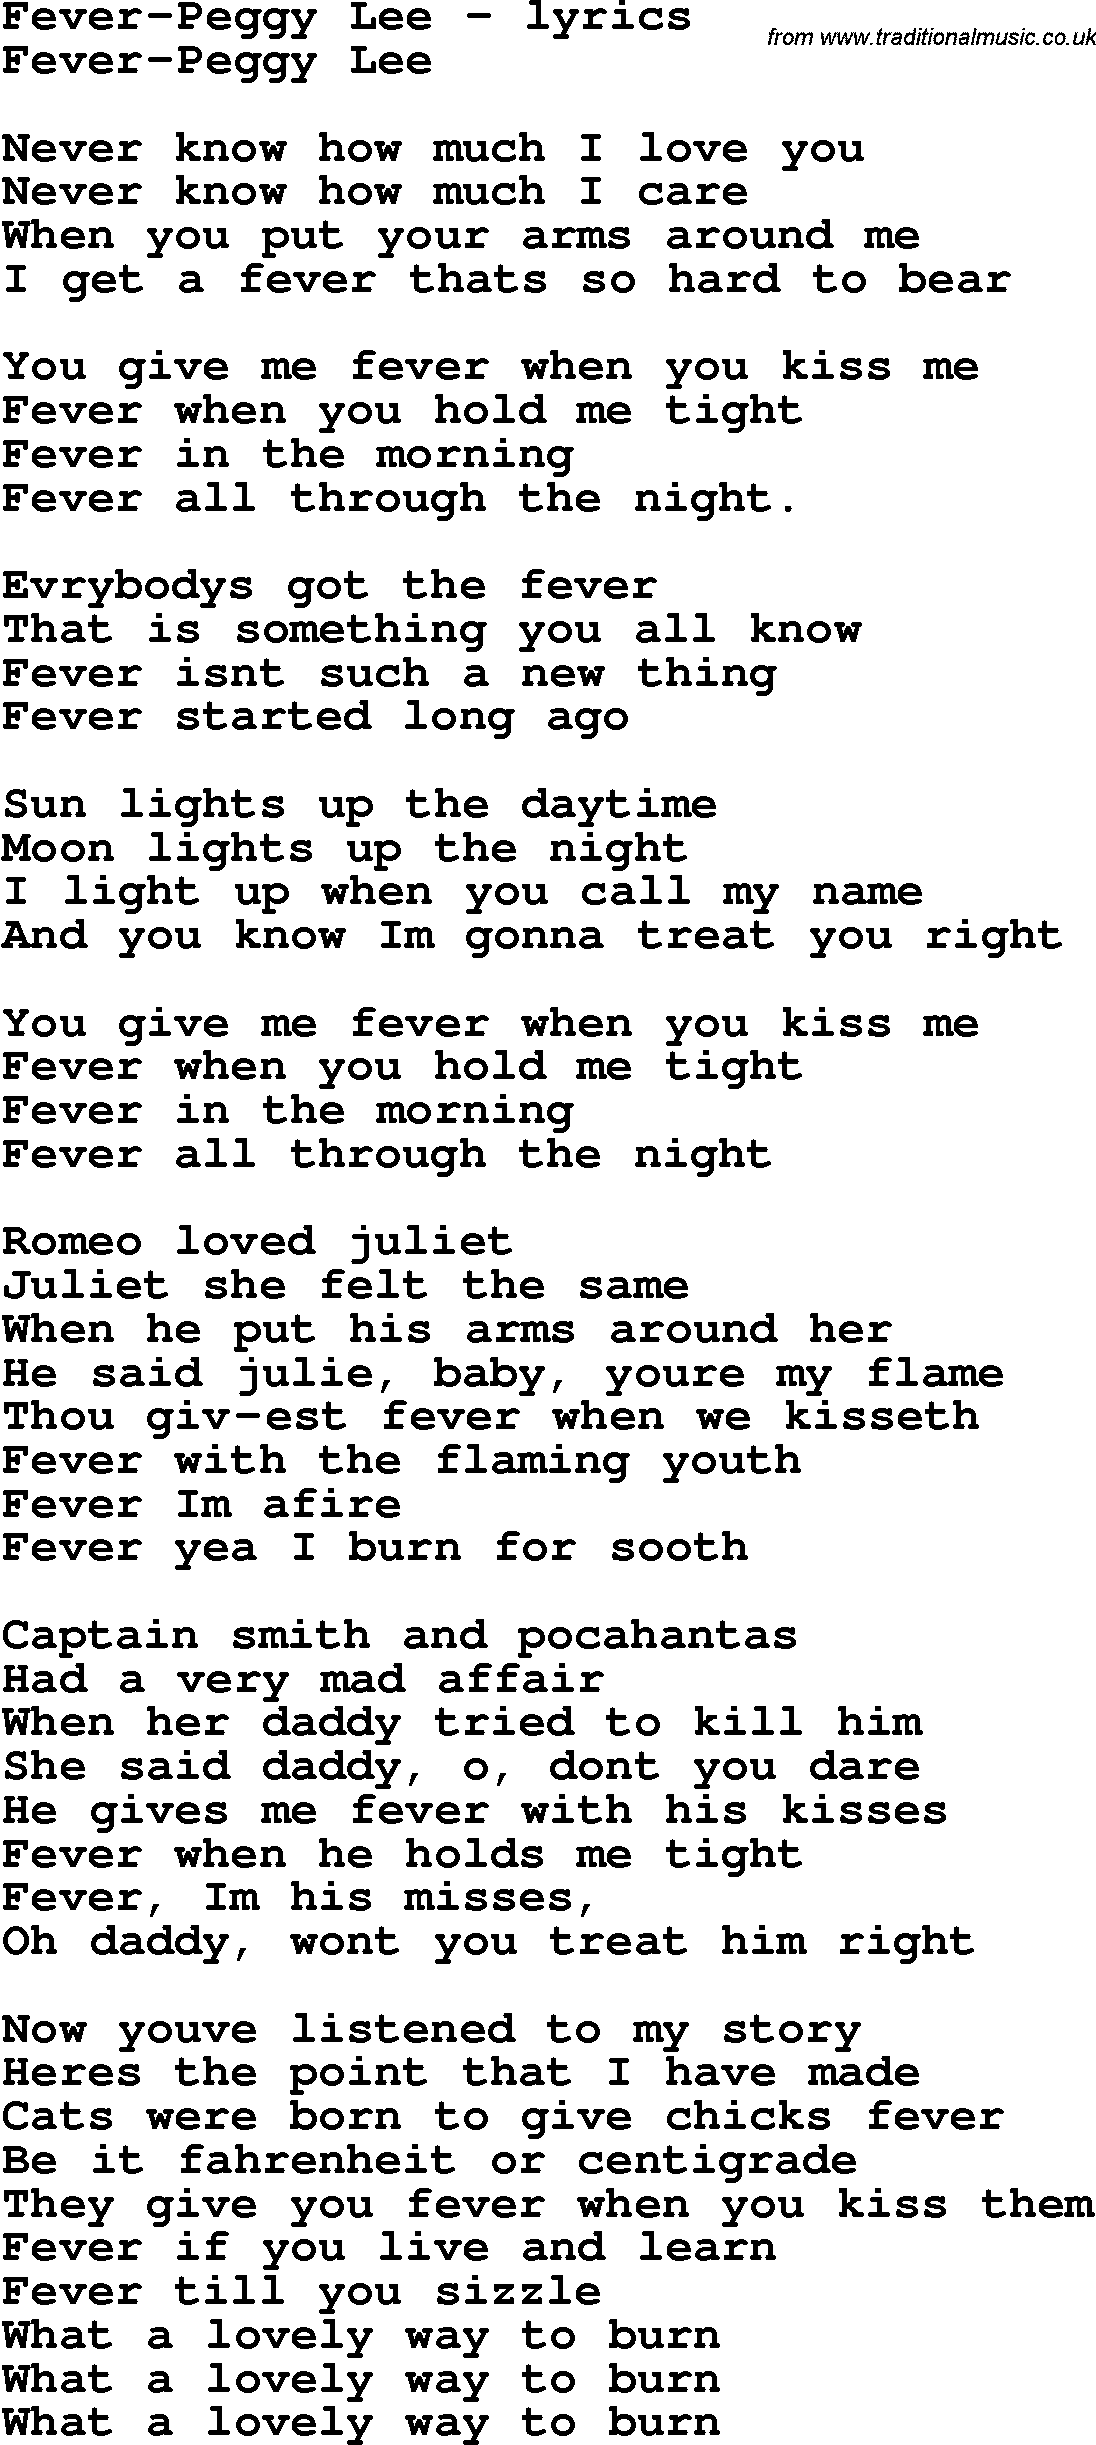 Love Song Lyrics for: Fever-Peggy Lee